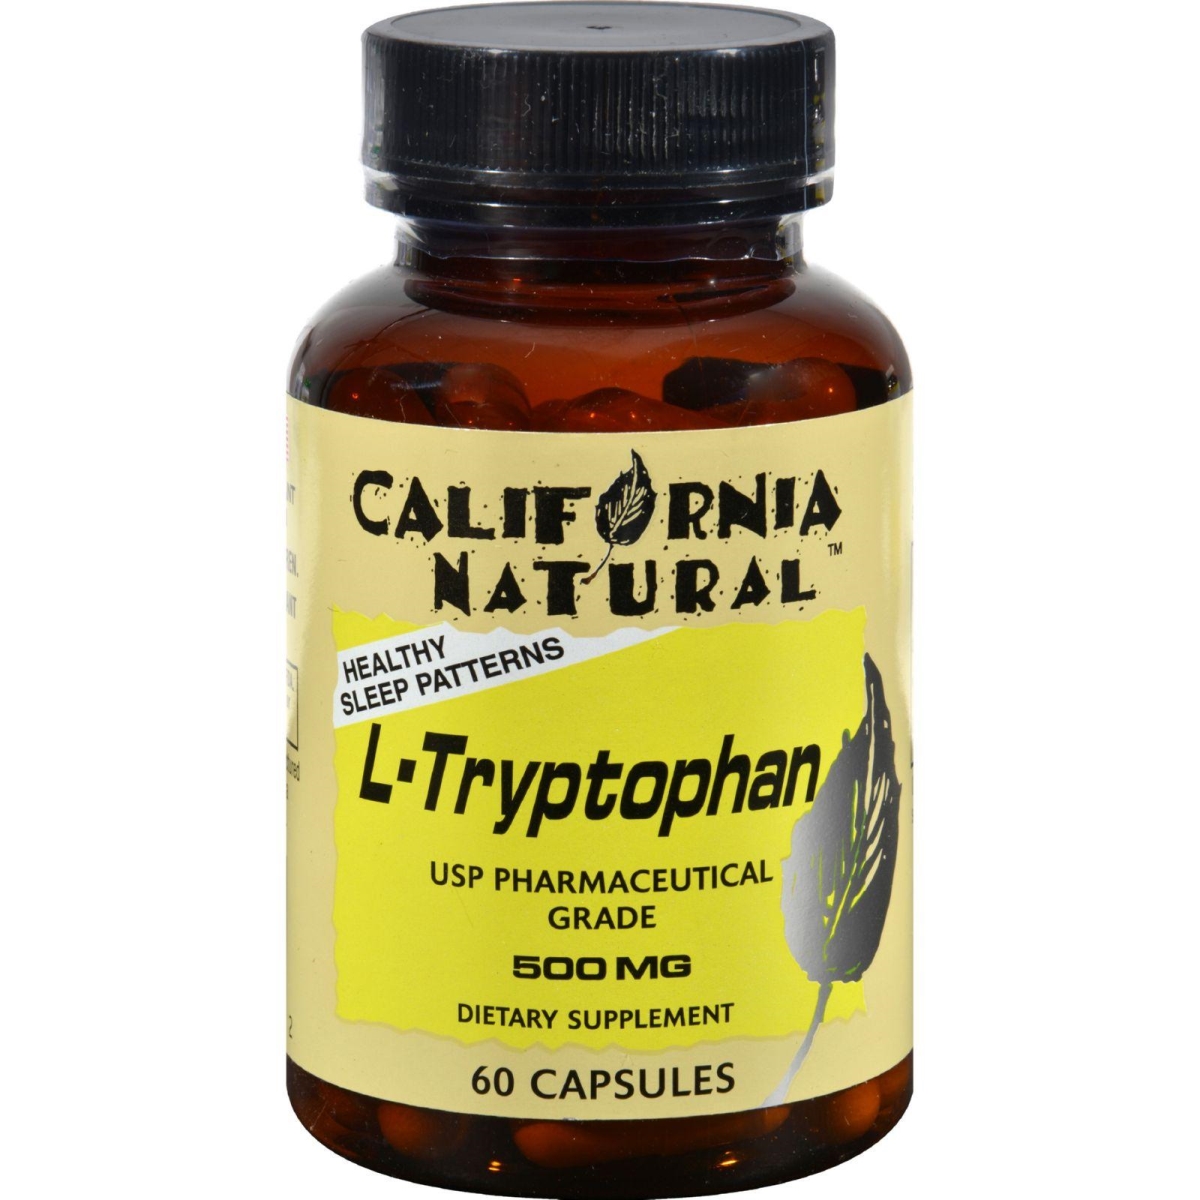 Hg0744235 500 Mg L-tryptophan, 60 Capsules